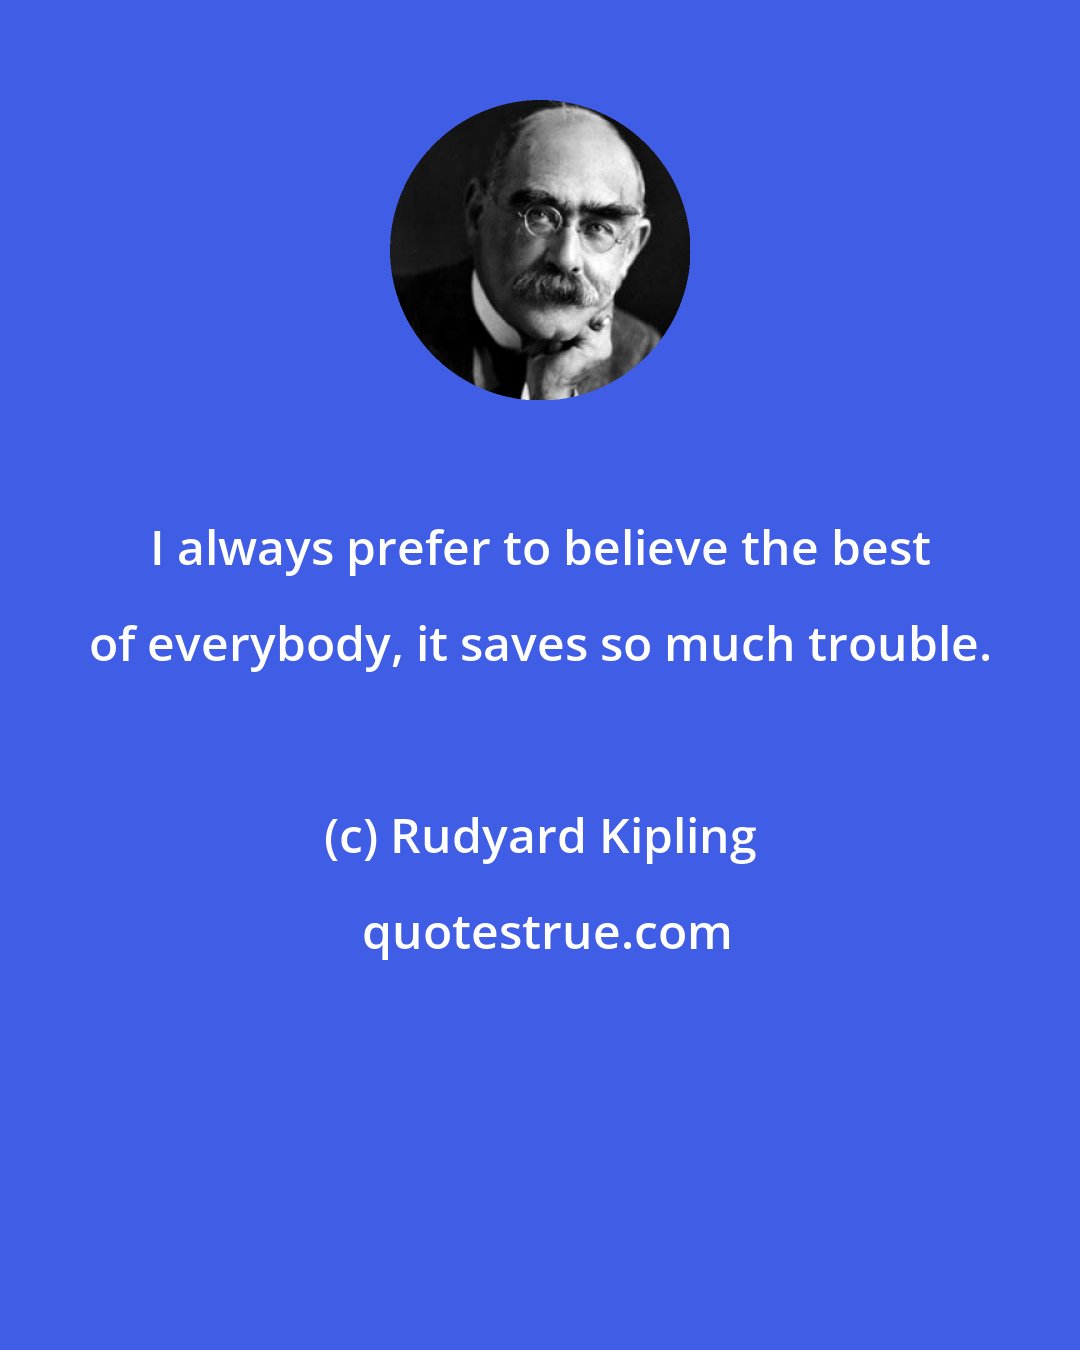 Rudyard Kipling: I always prefer to believe the best of everybody, it saves so much trouble.